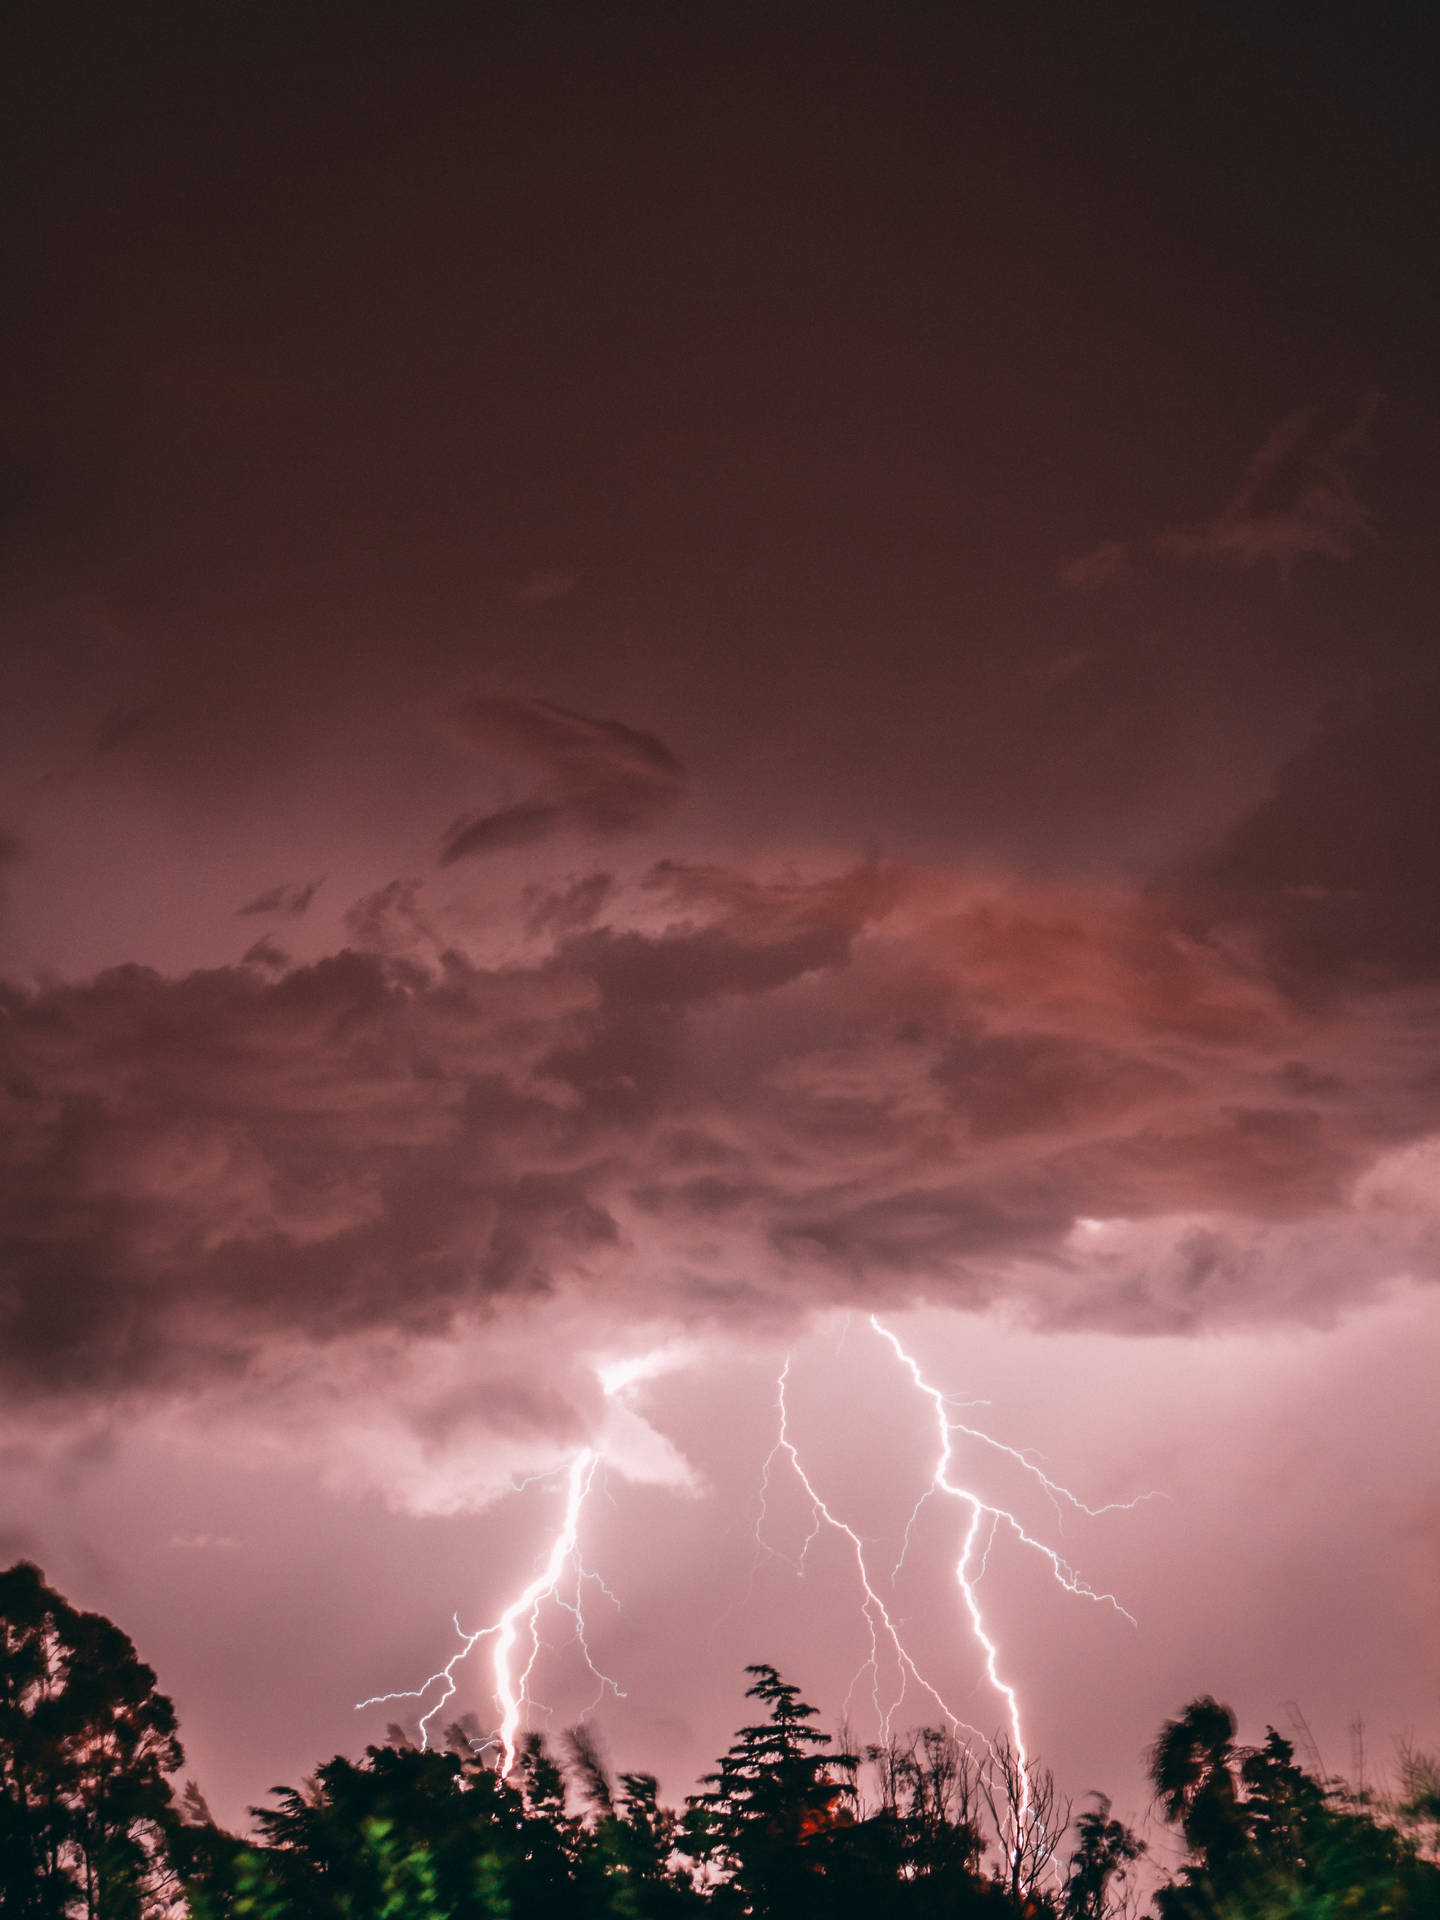 Lightning strikes during a storm - Lightning